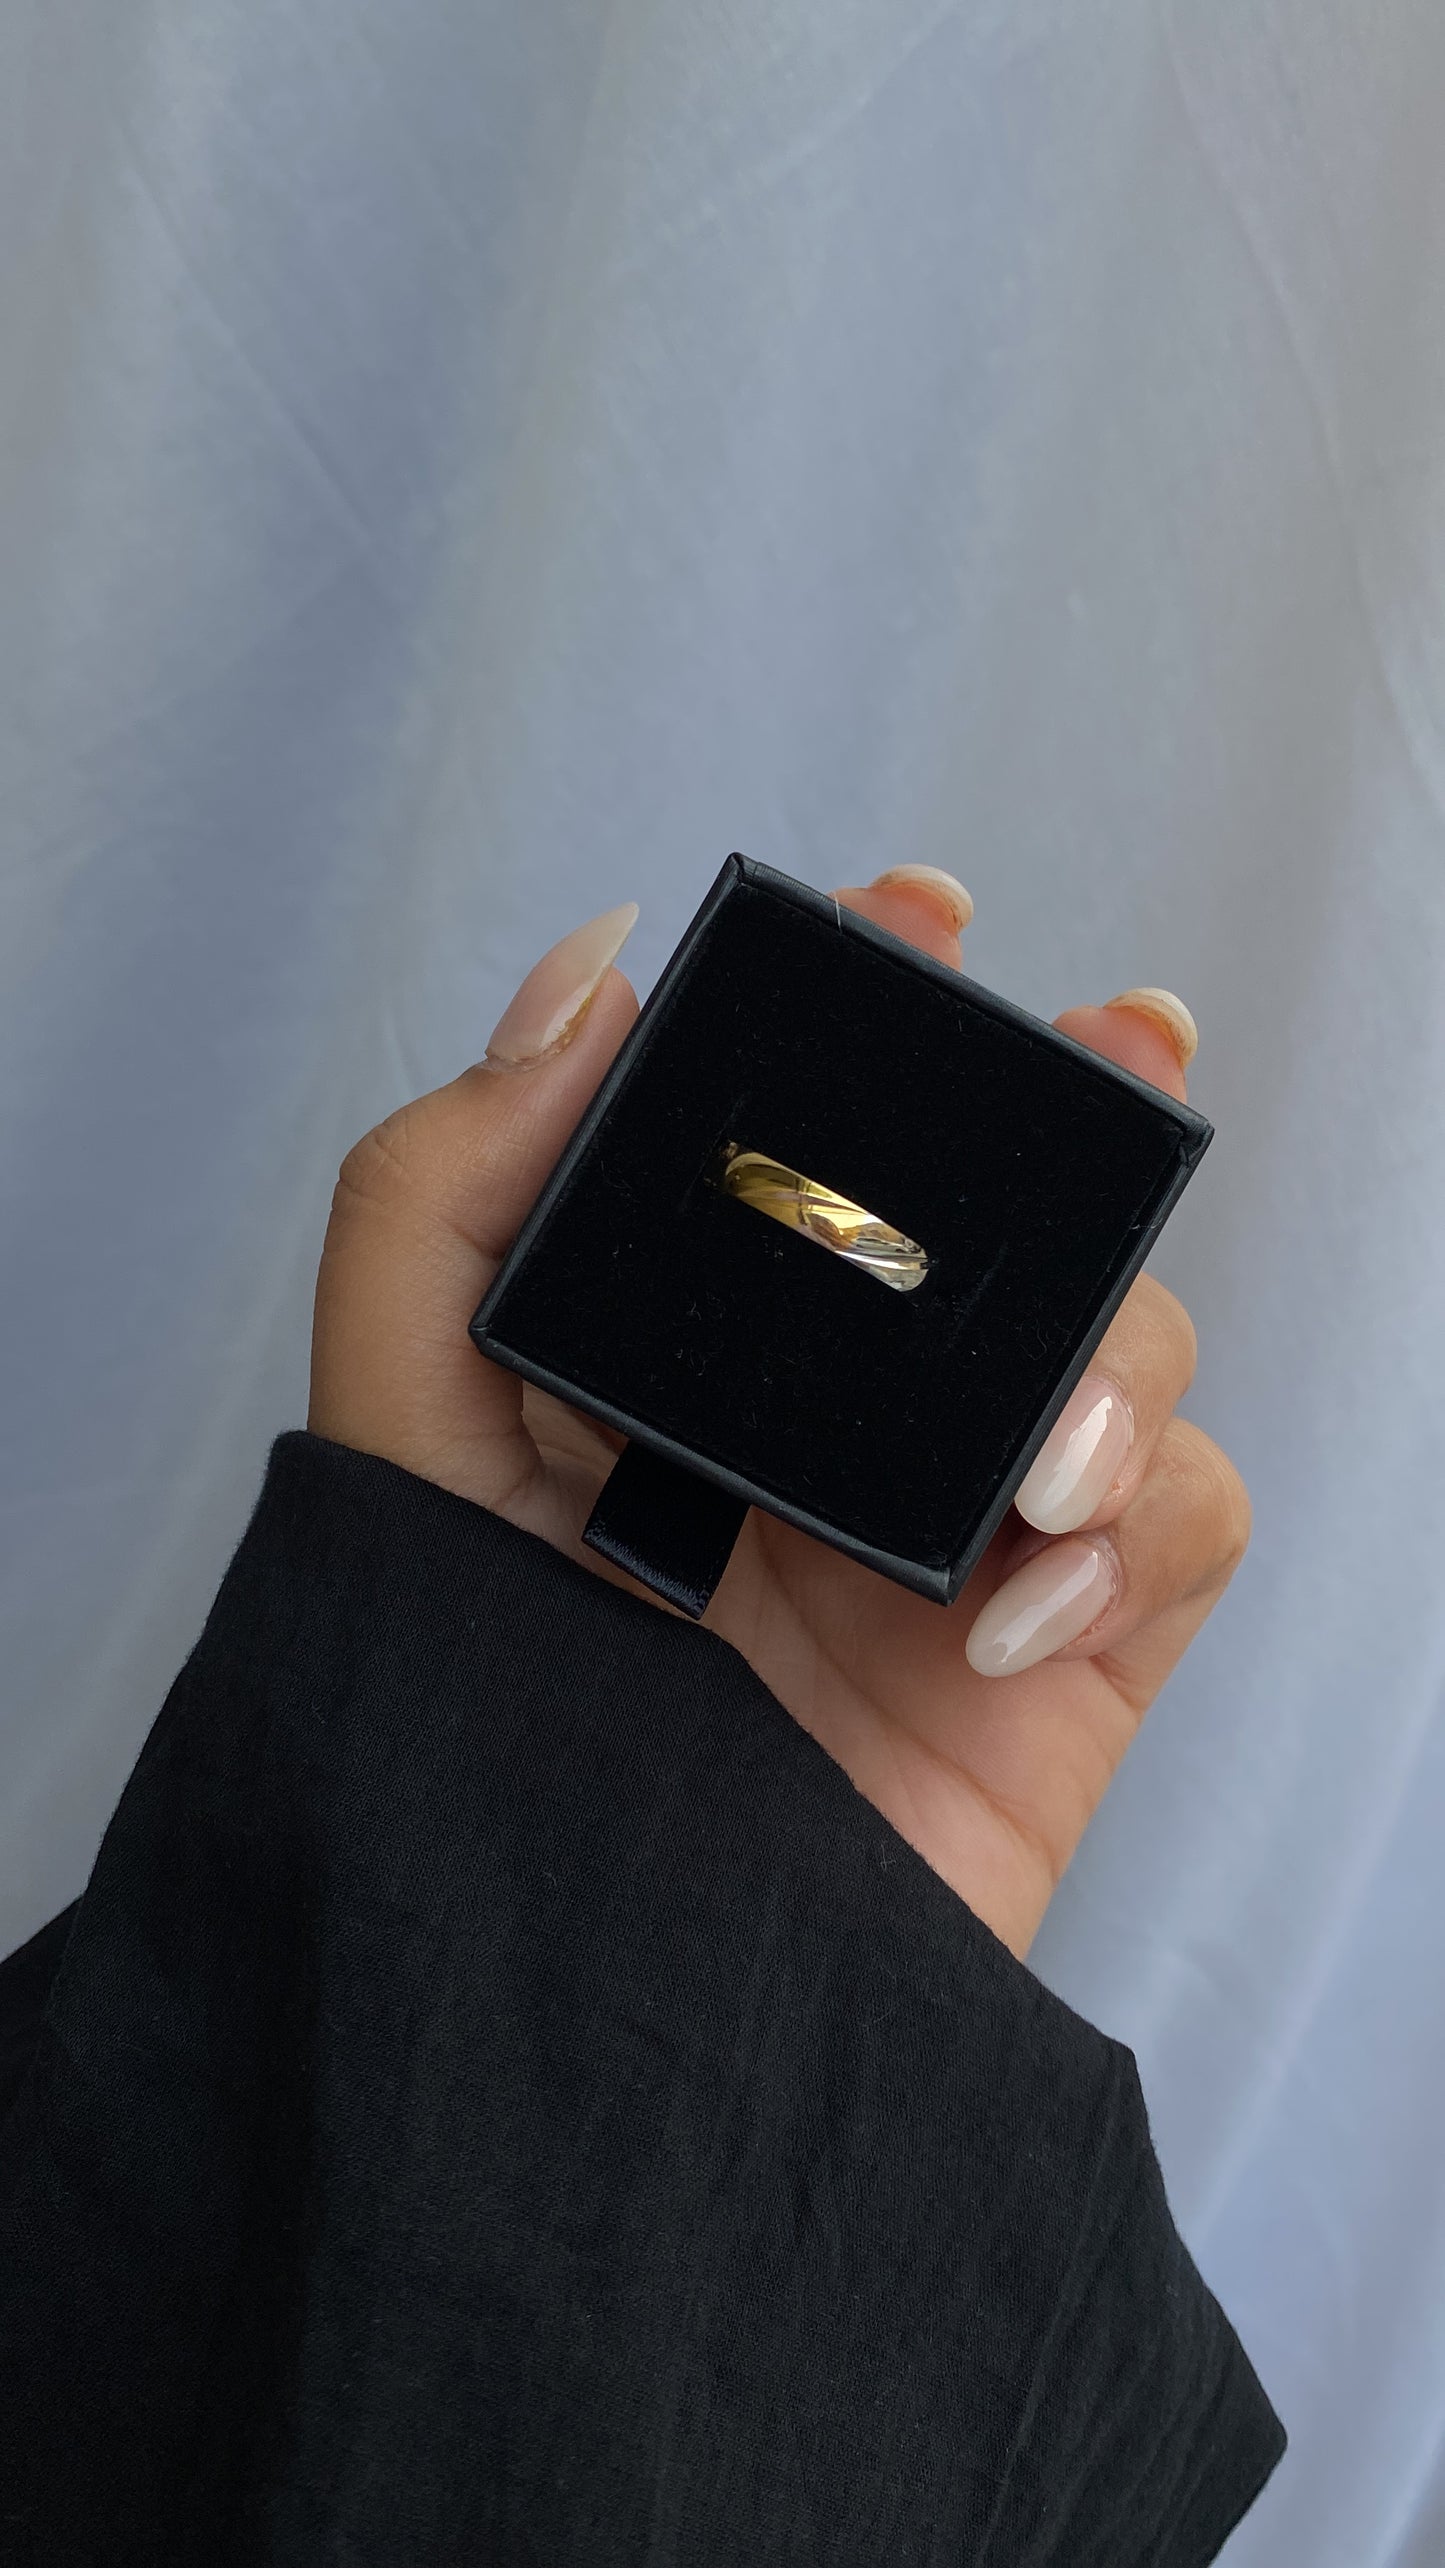 Dual ring (half golden,half silver)